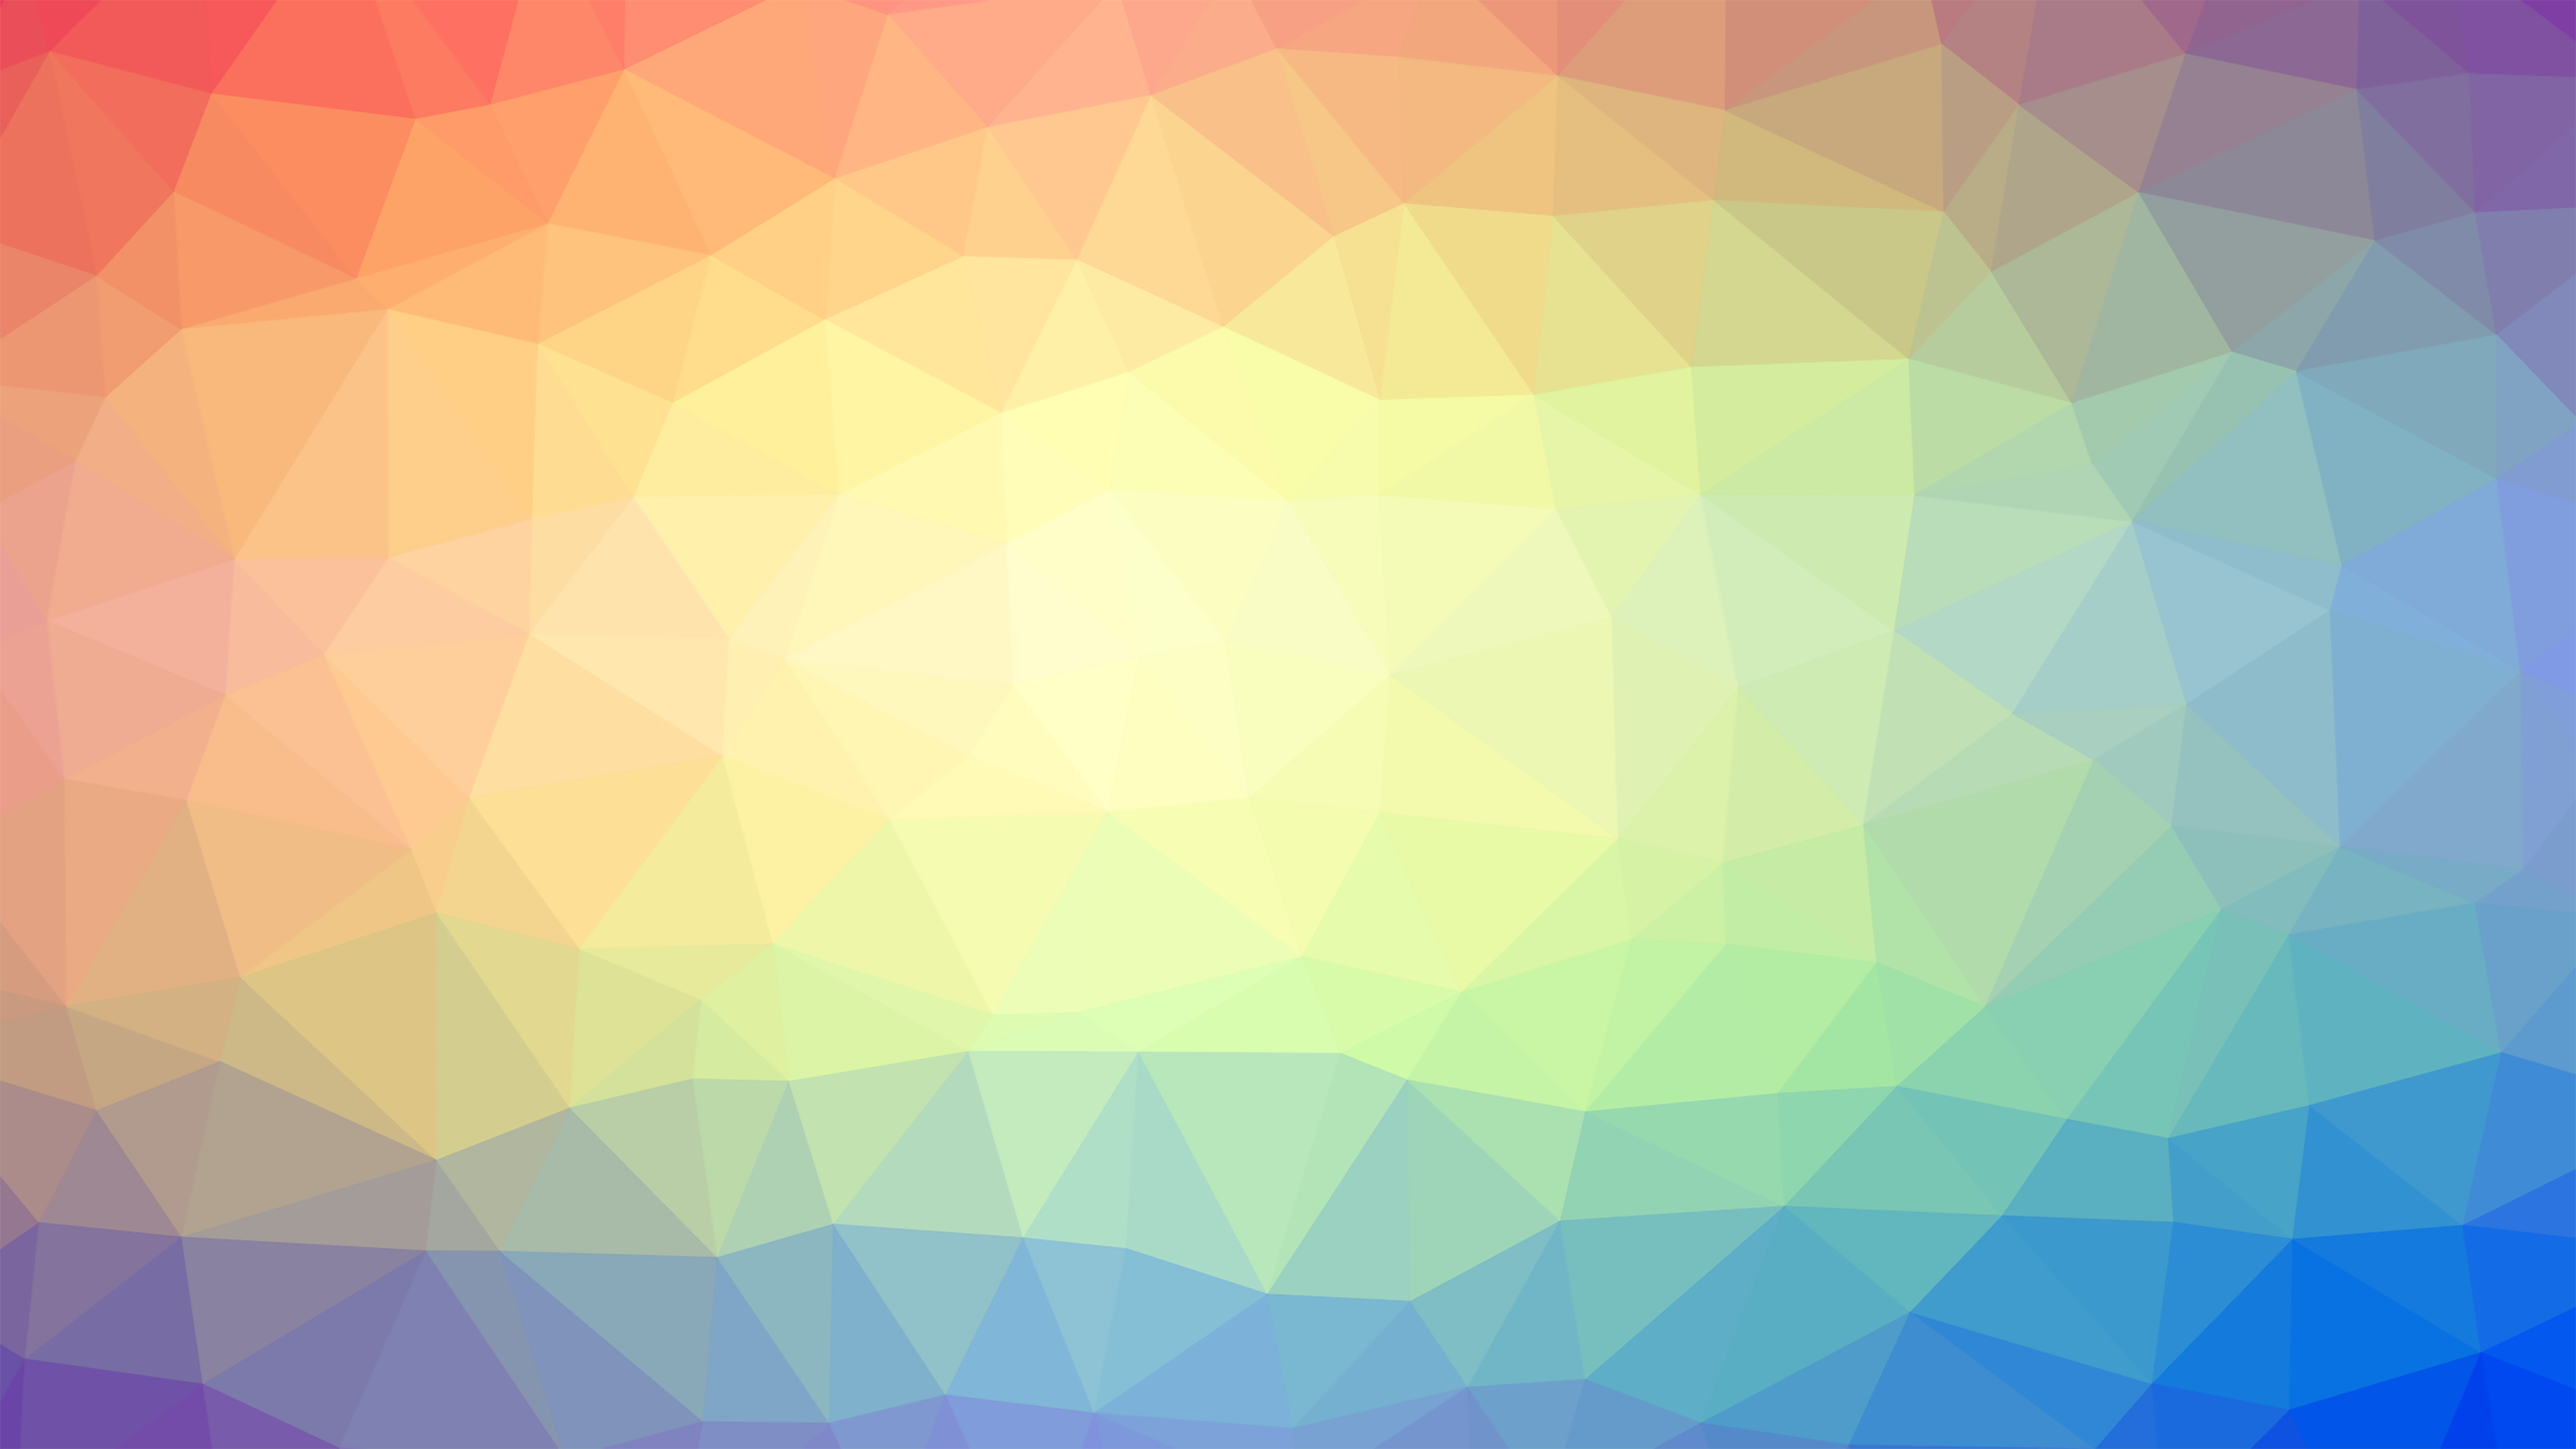 wallpaper for youtube channel,blue,orange,yellow,sky,pattern